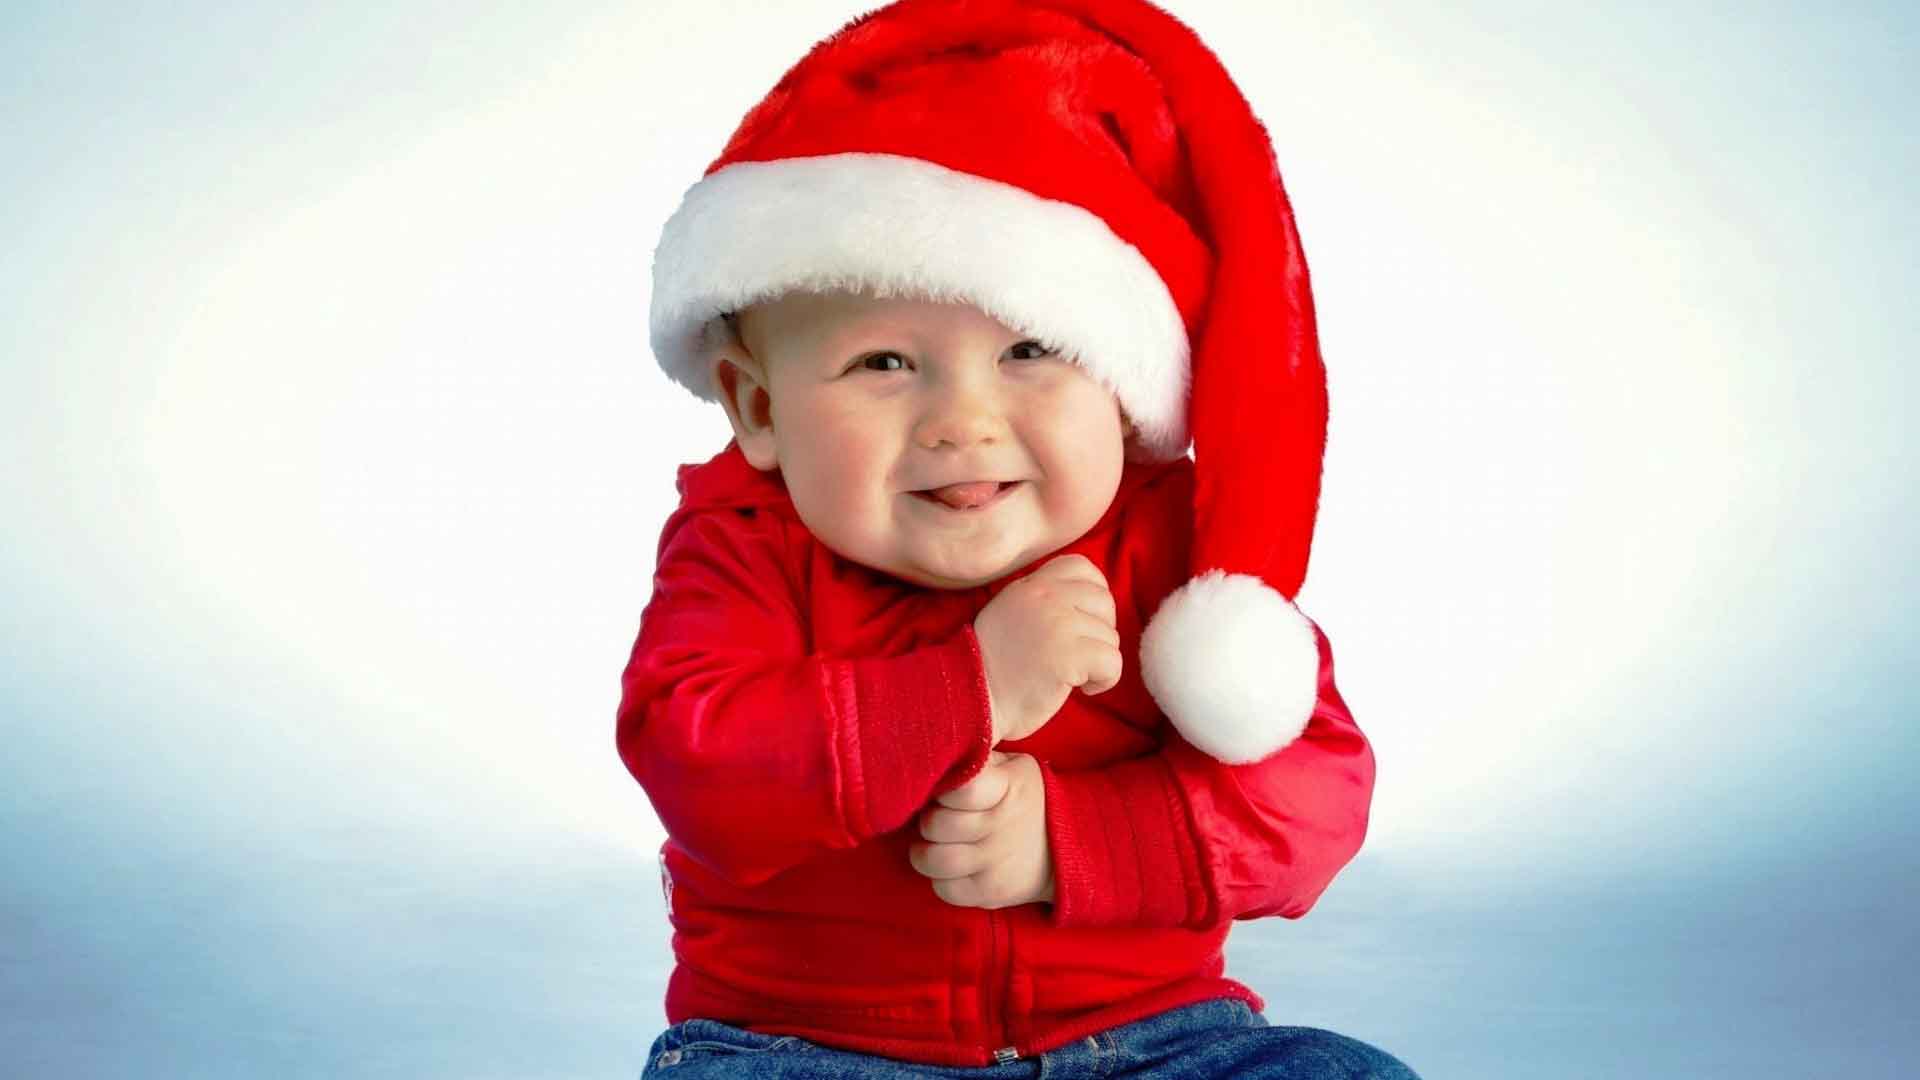 Santa Claus Hd Wallpapers 1080p - Cute Baby In Christmas Dress - HD Wallpaper 